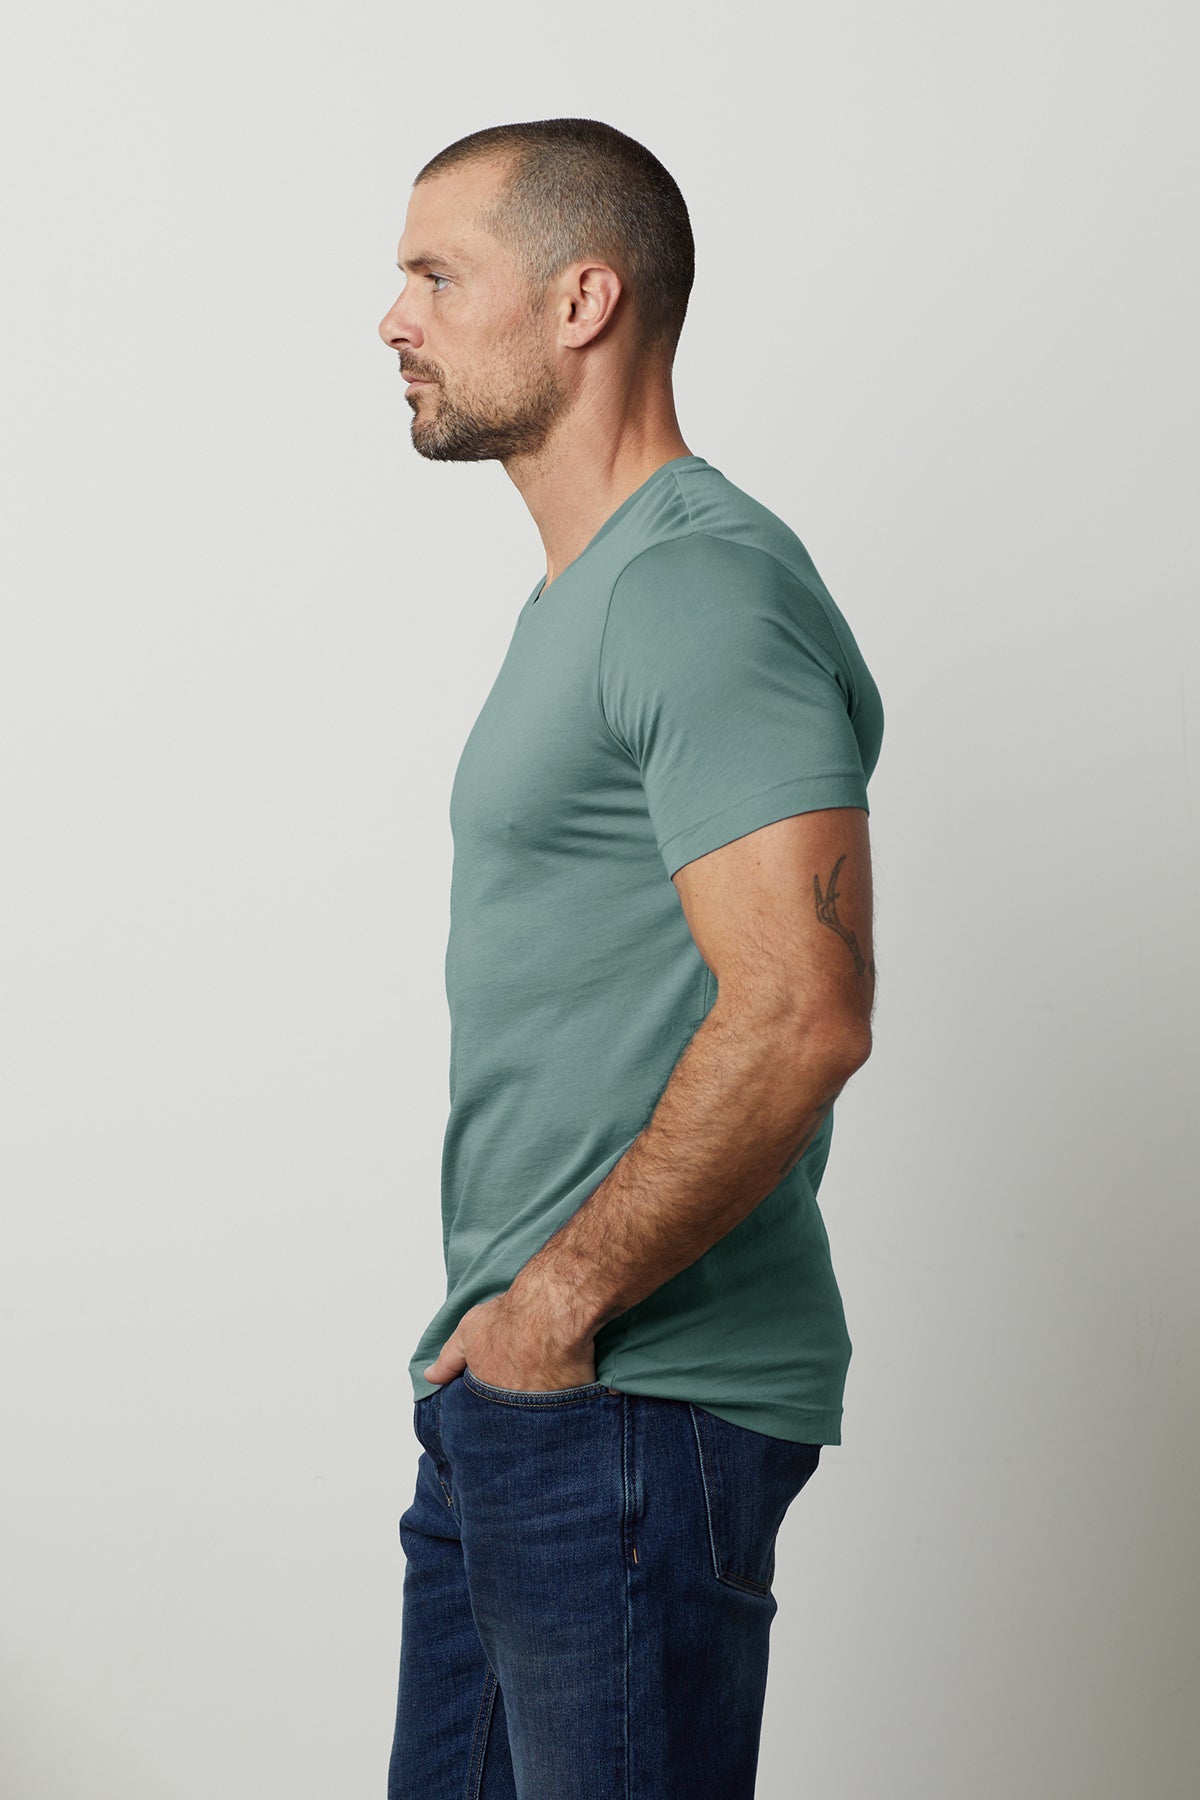   A man wearing jeans and a green SAMSEN WHISPER CLASSIC V-NECK TEE by Velvet by Graham & Spencer. 